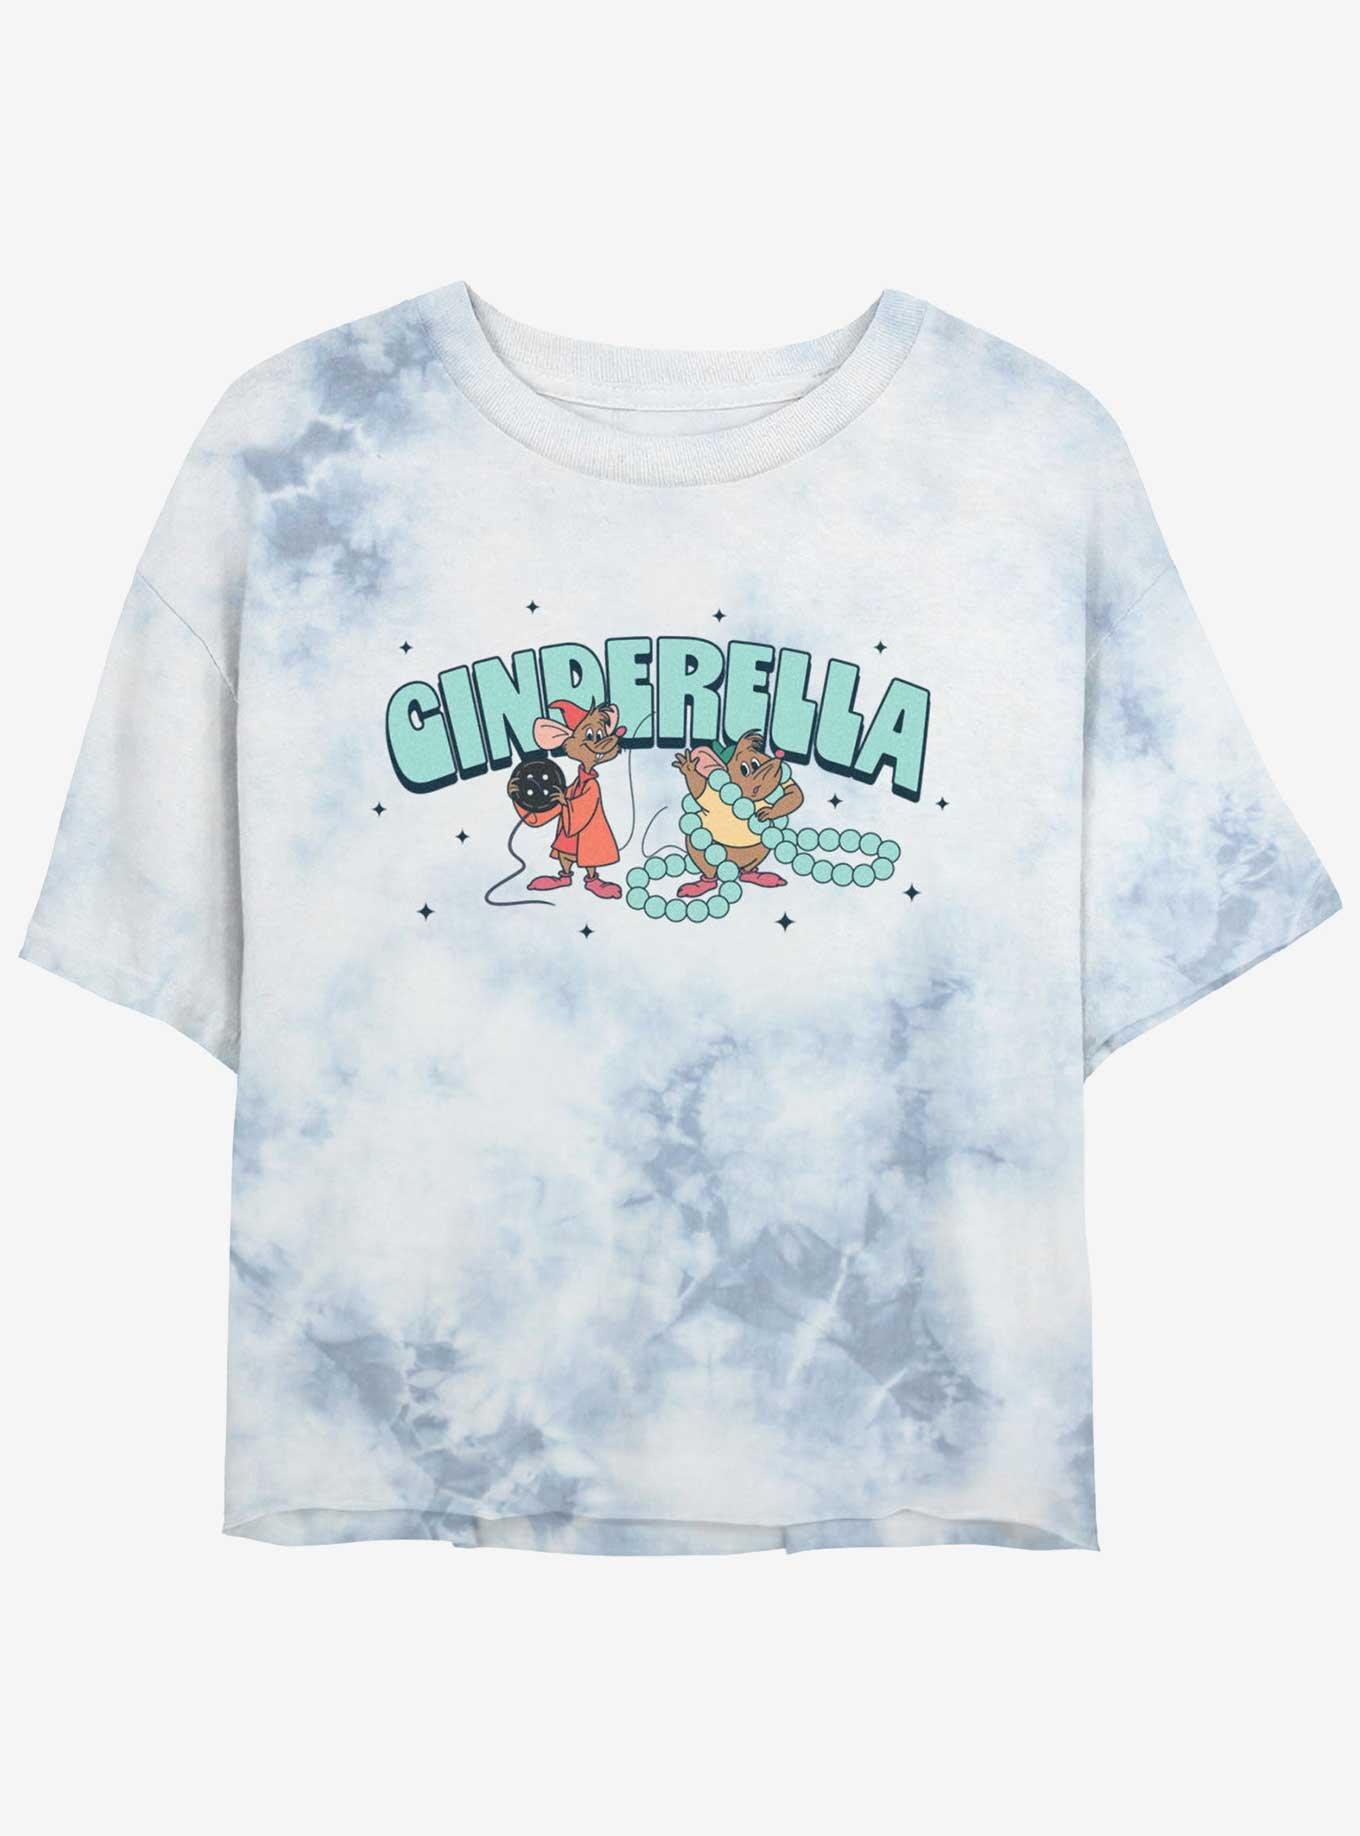 Disney Cinderella Jaq And Gus Girls Tie-Dye Crop T-Shirt, WHITEBLUE, hi-res